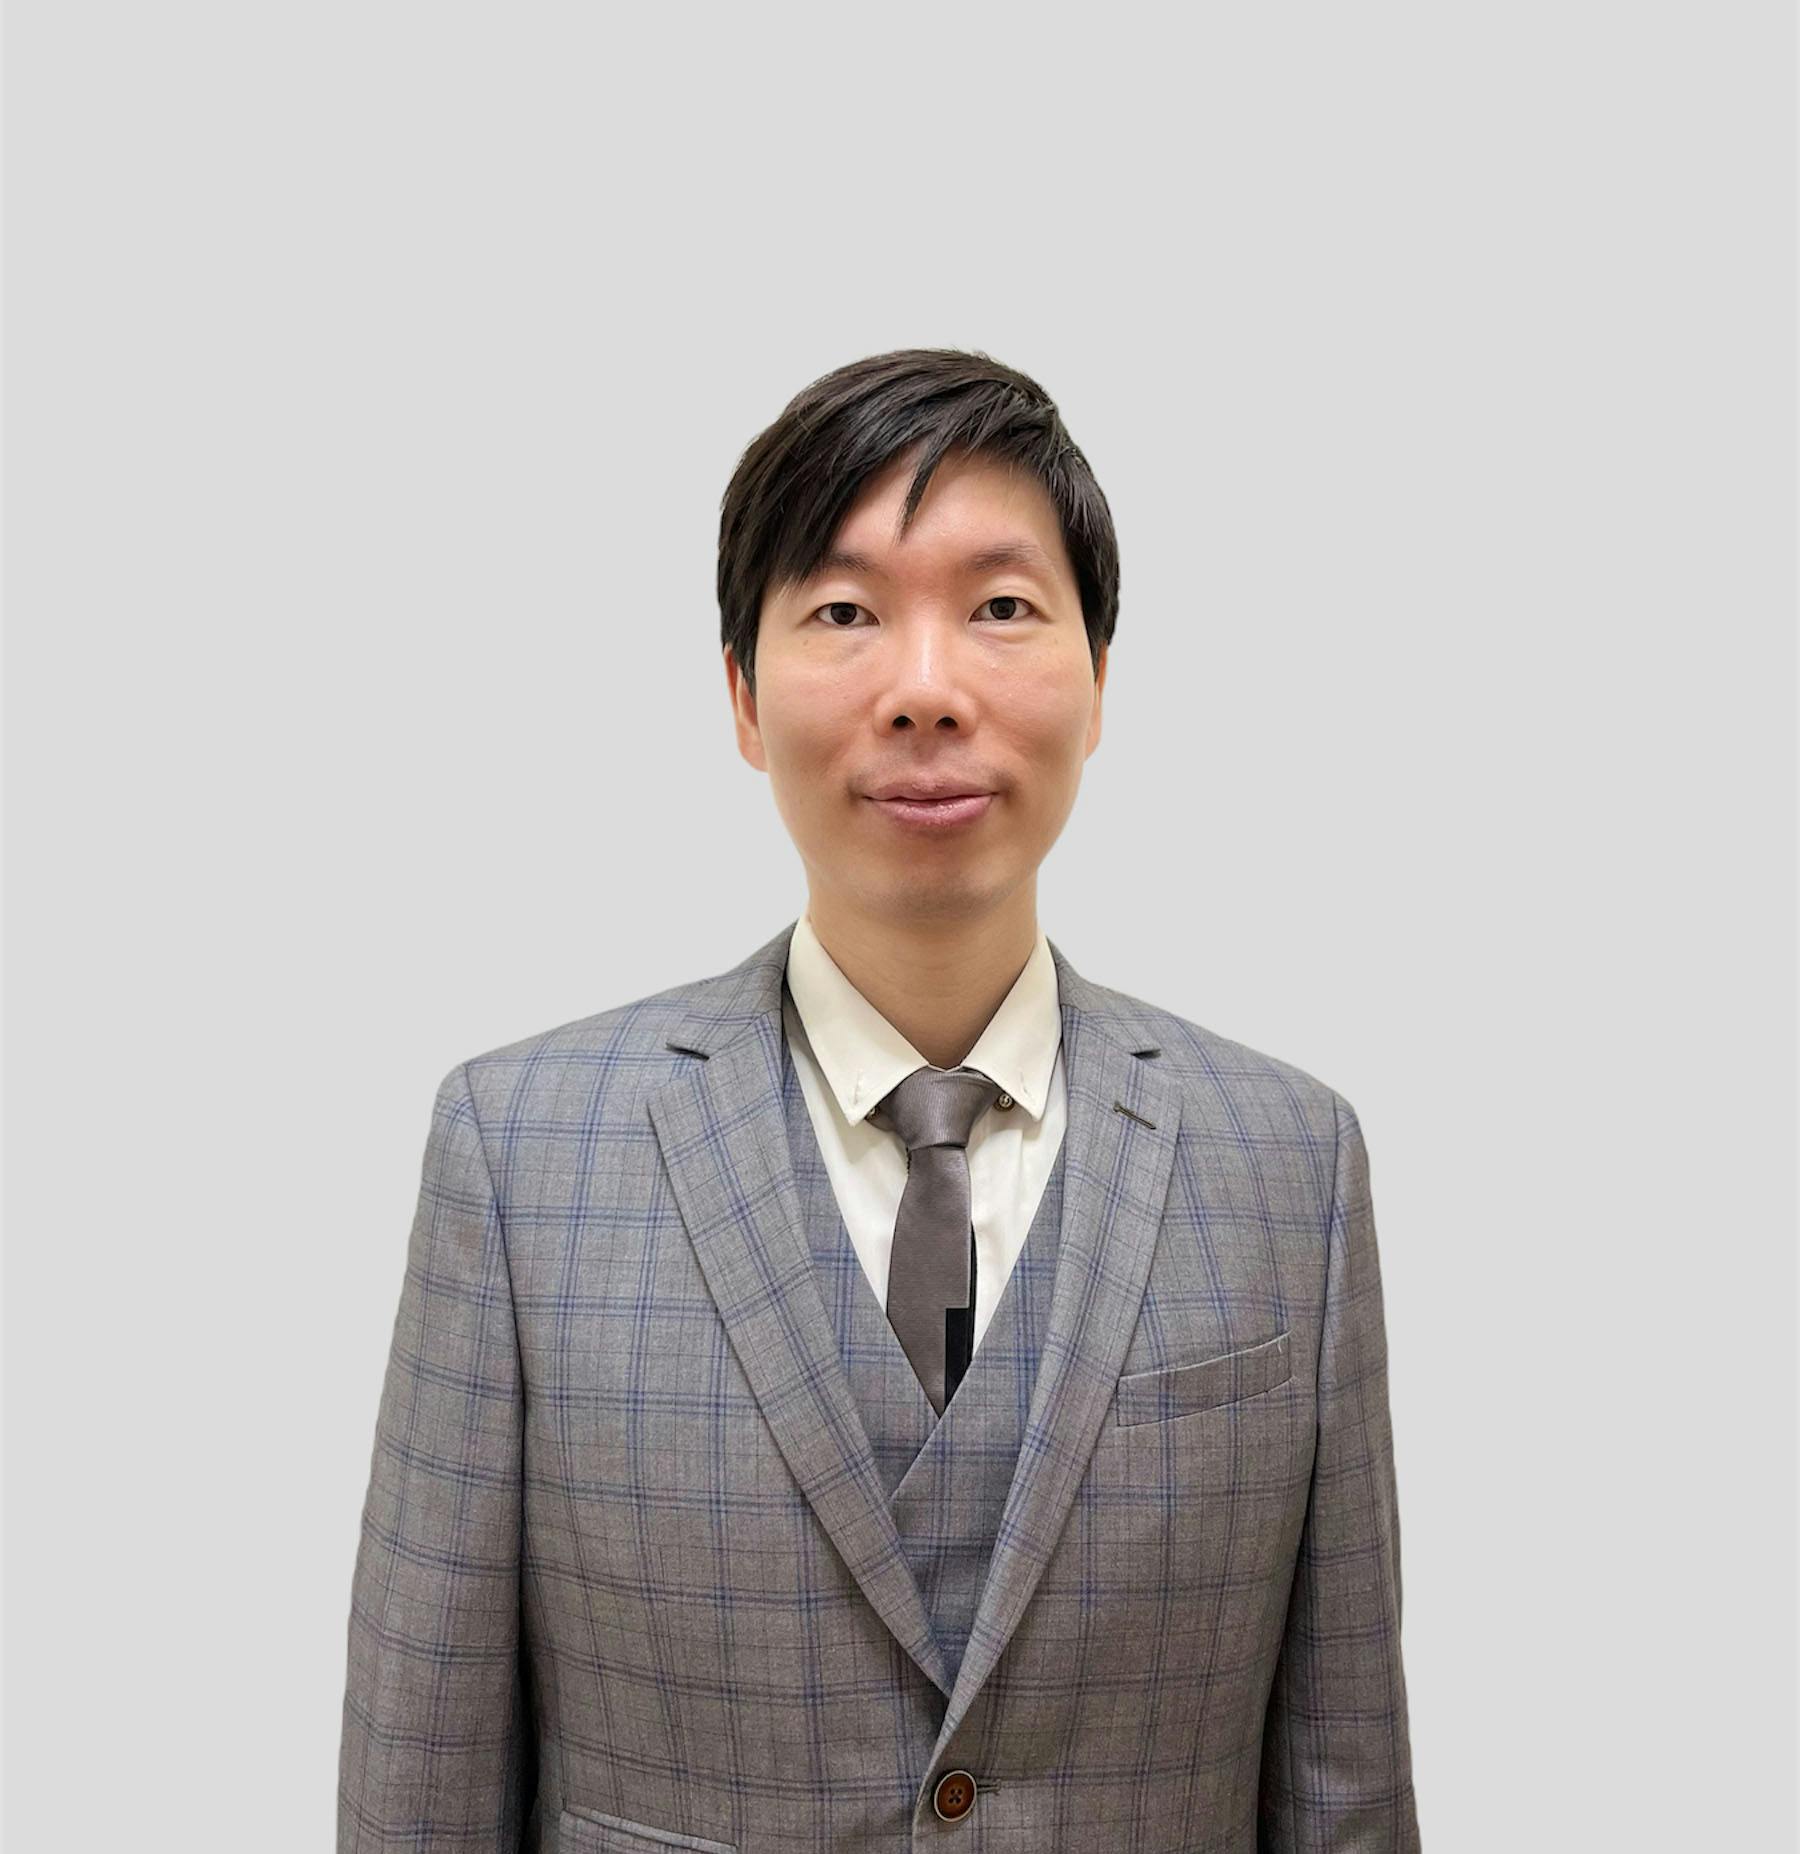 Po Man Chan - Quality Control Director, APAC - headshot